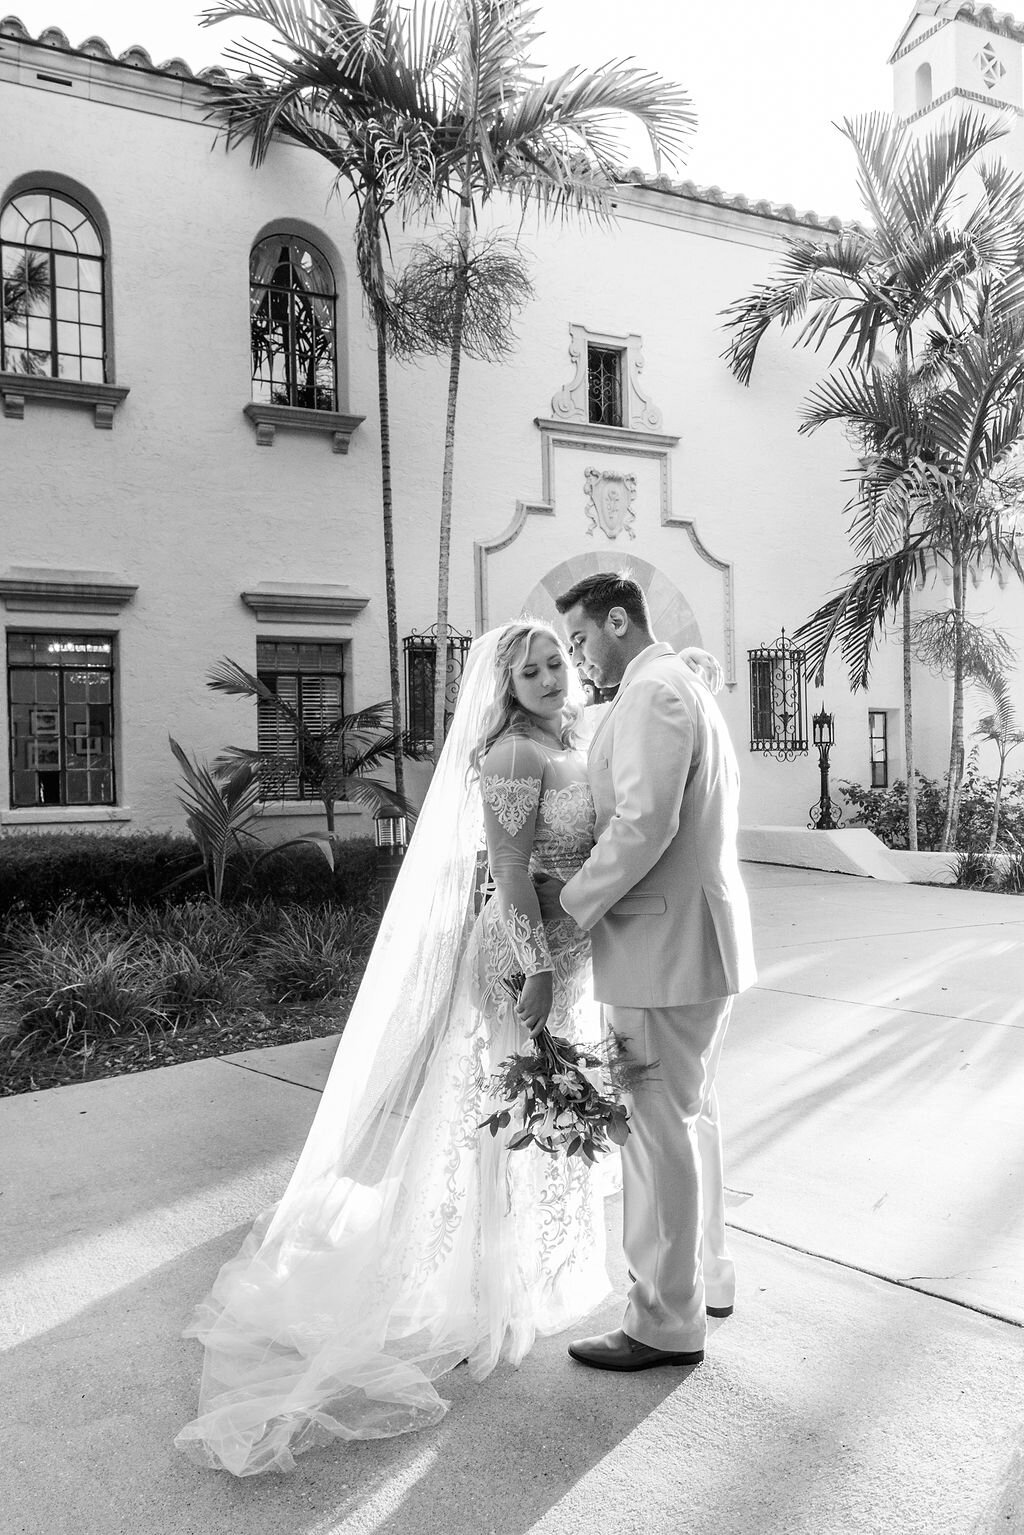 Romantic Powel Crosley Estate wedding in Sarasota, Florida